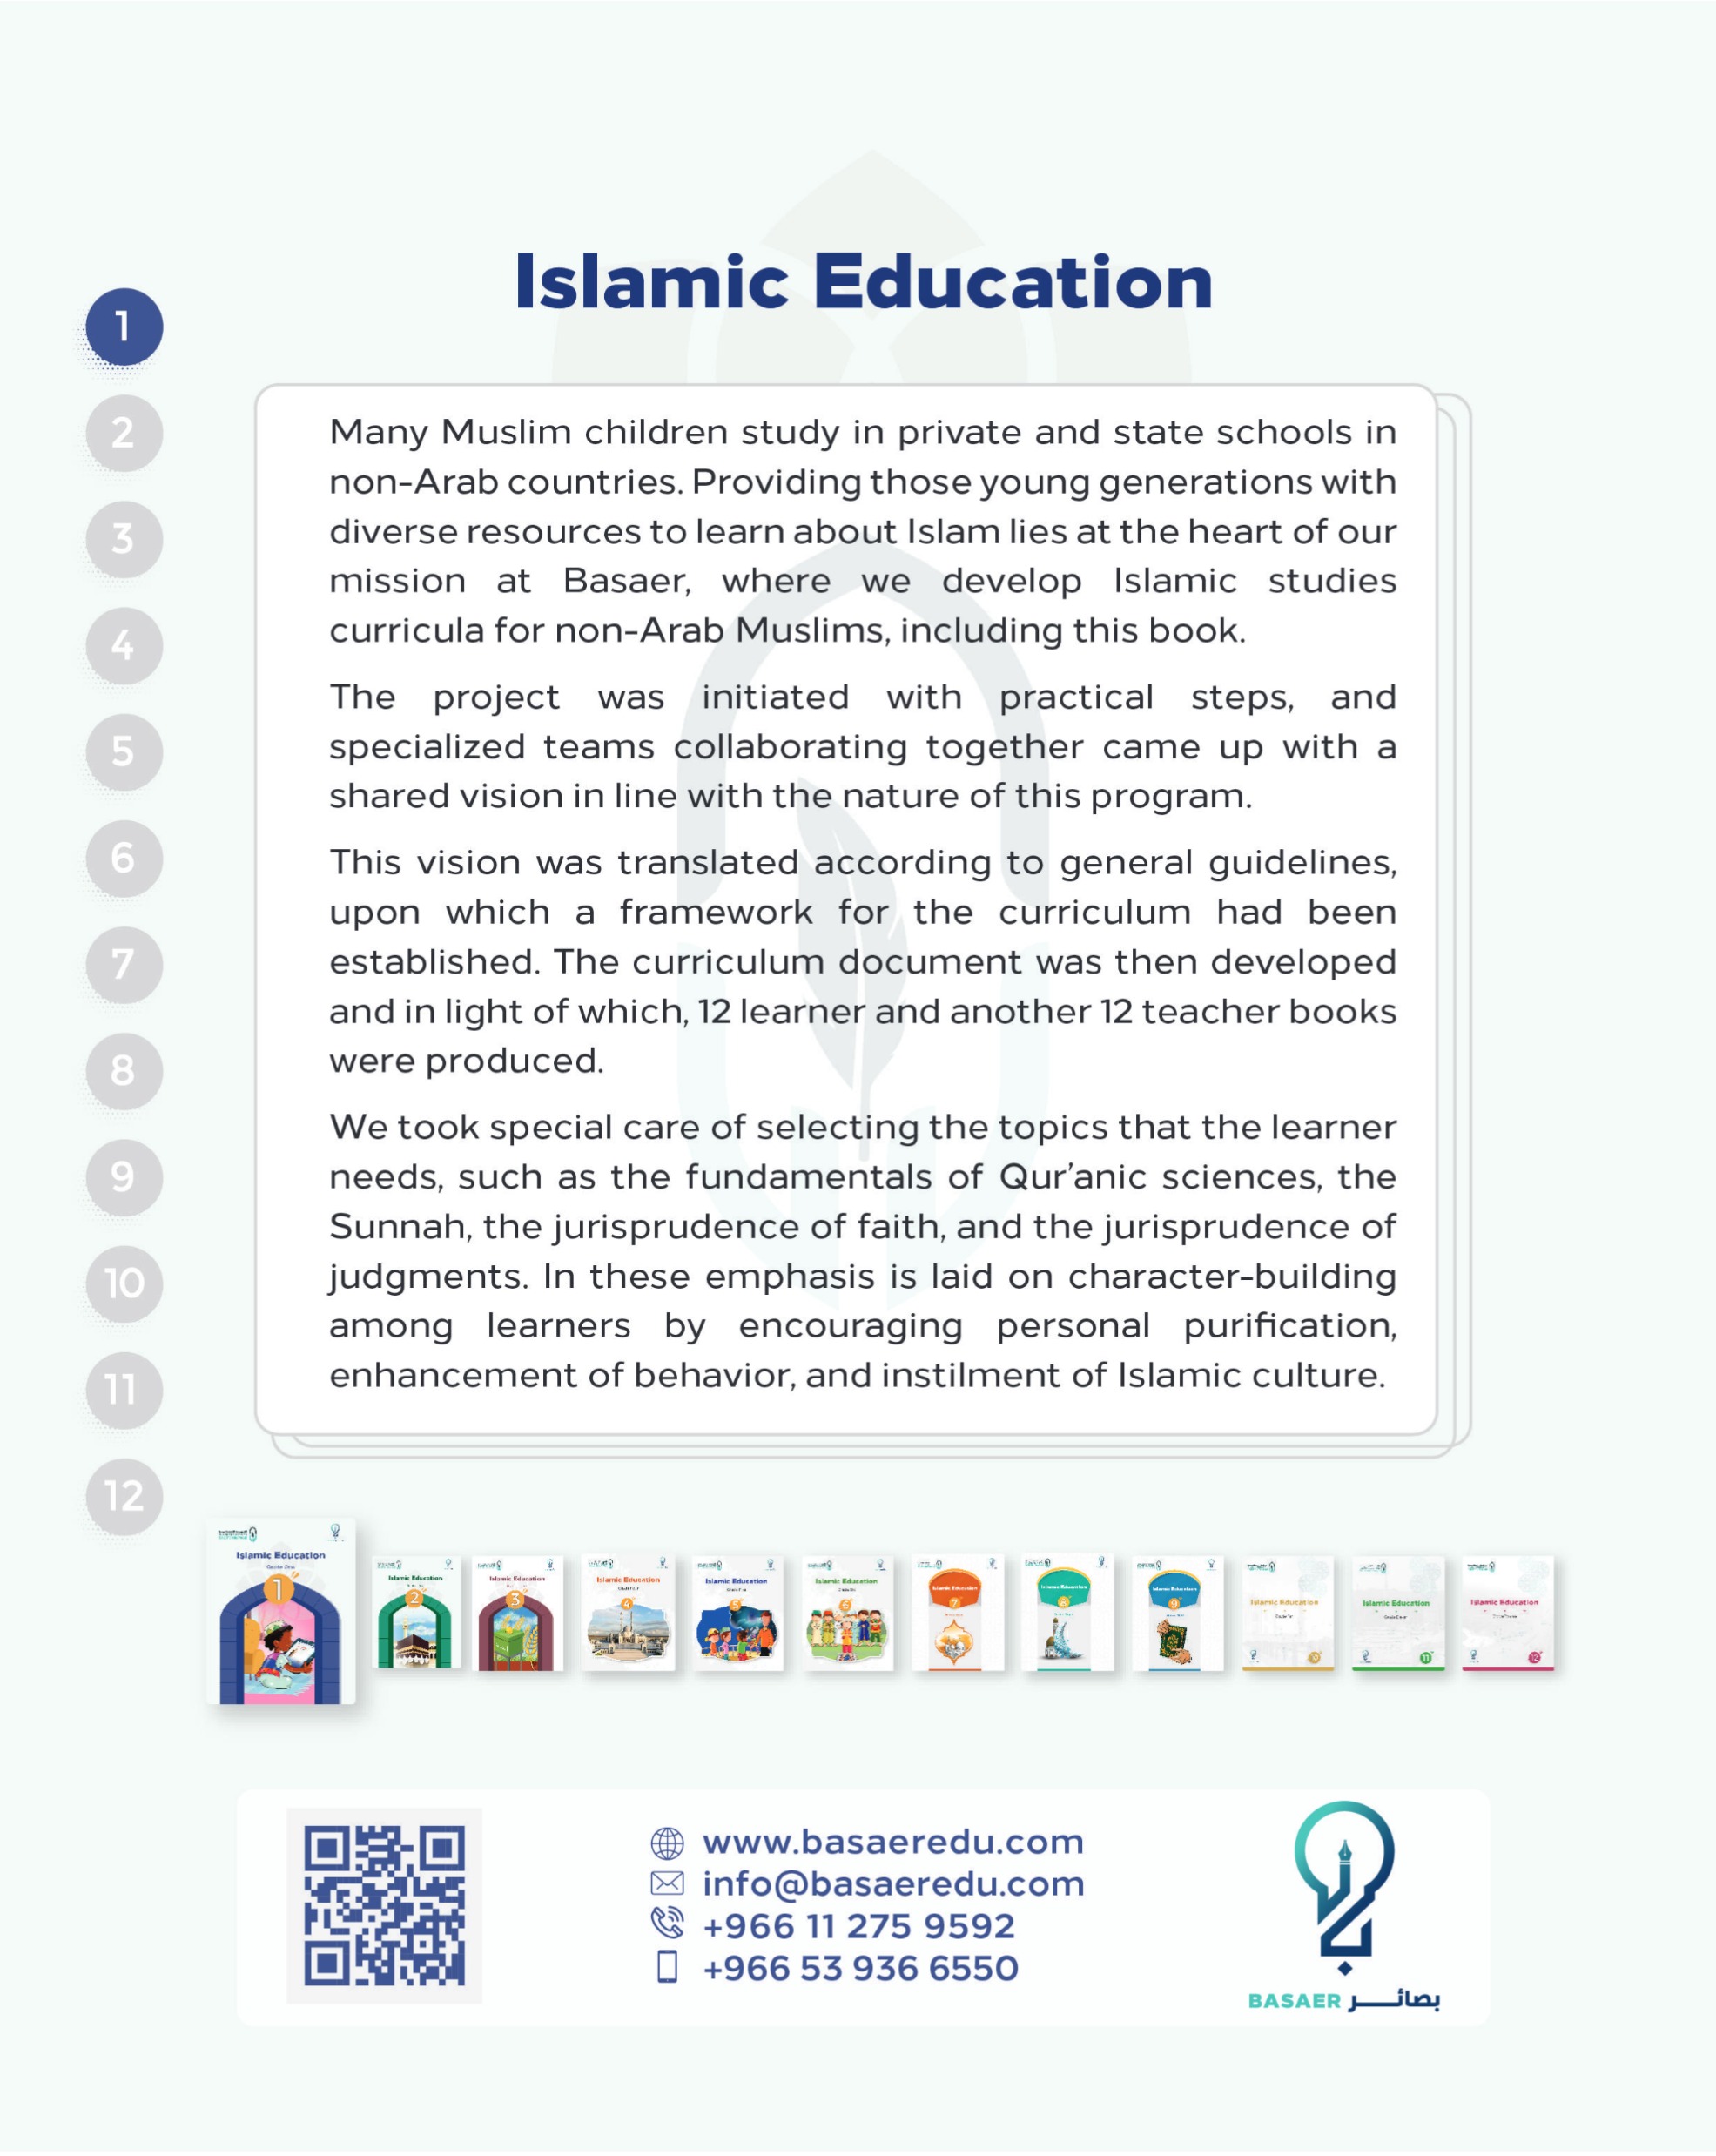 (1) Islamic Education